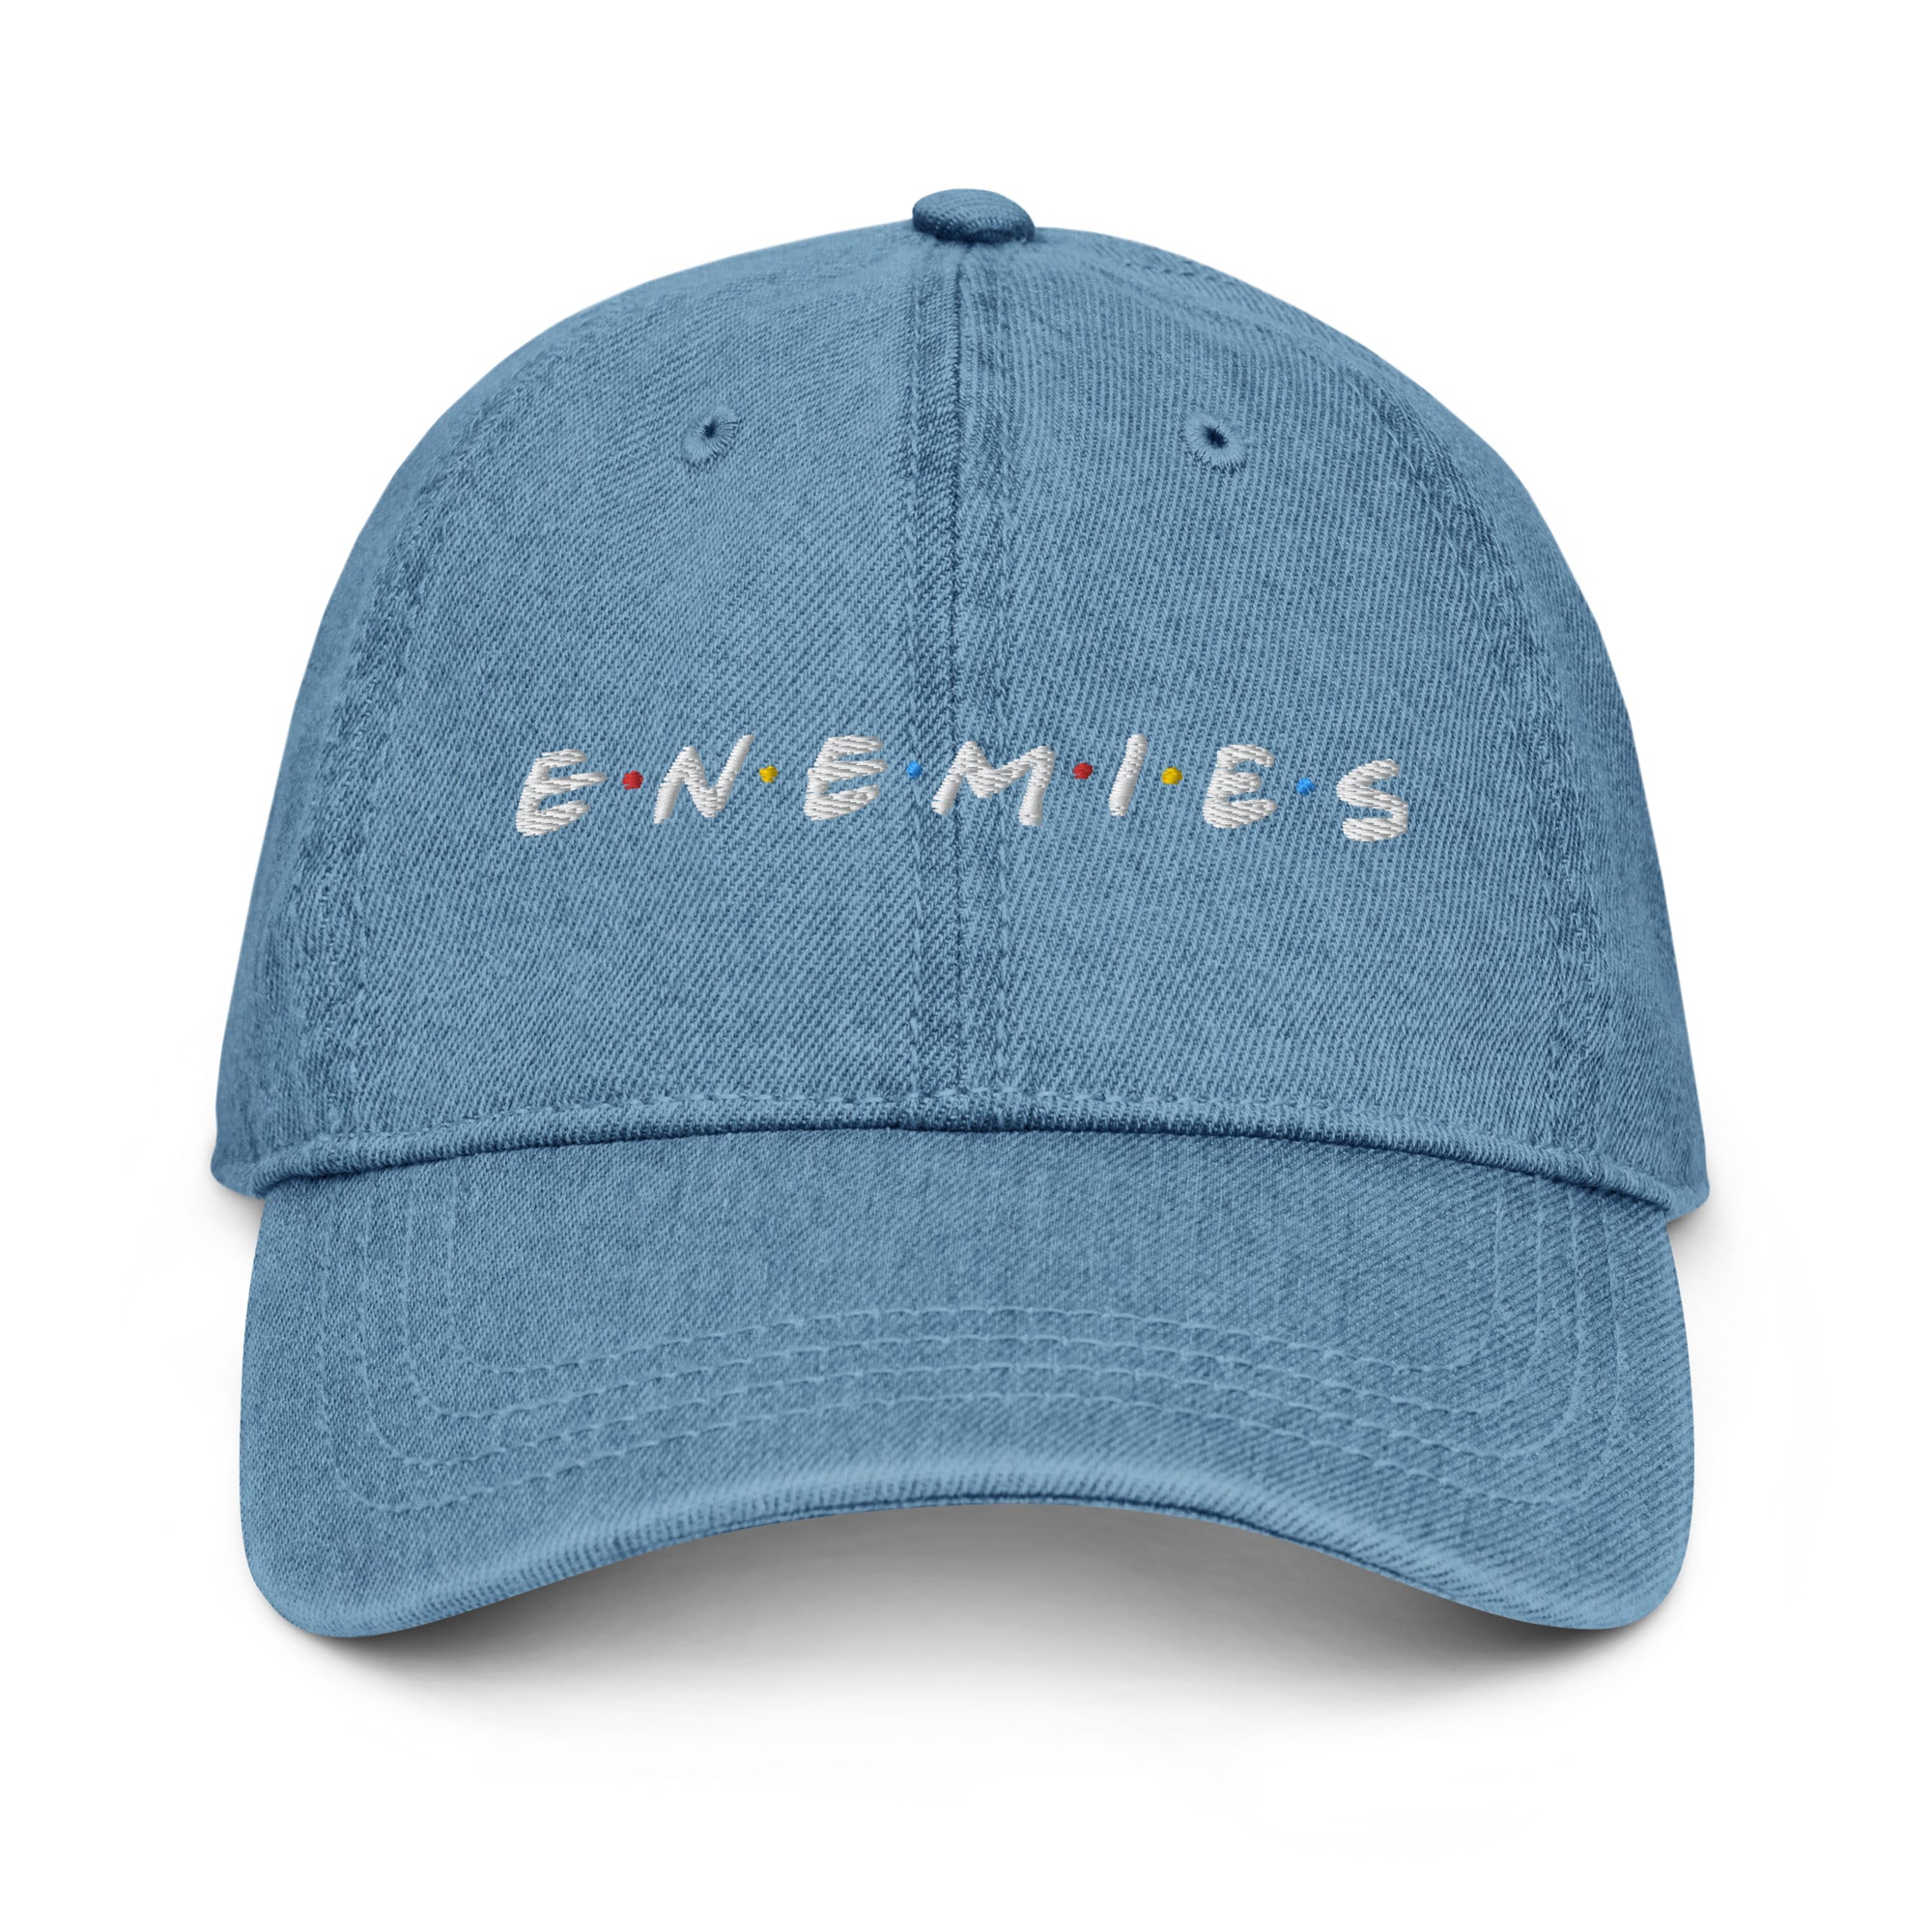 Enemies Denim Hat